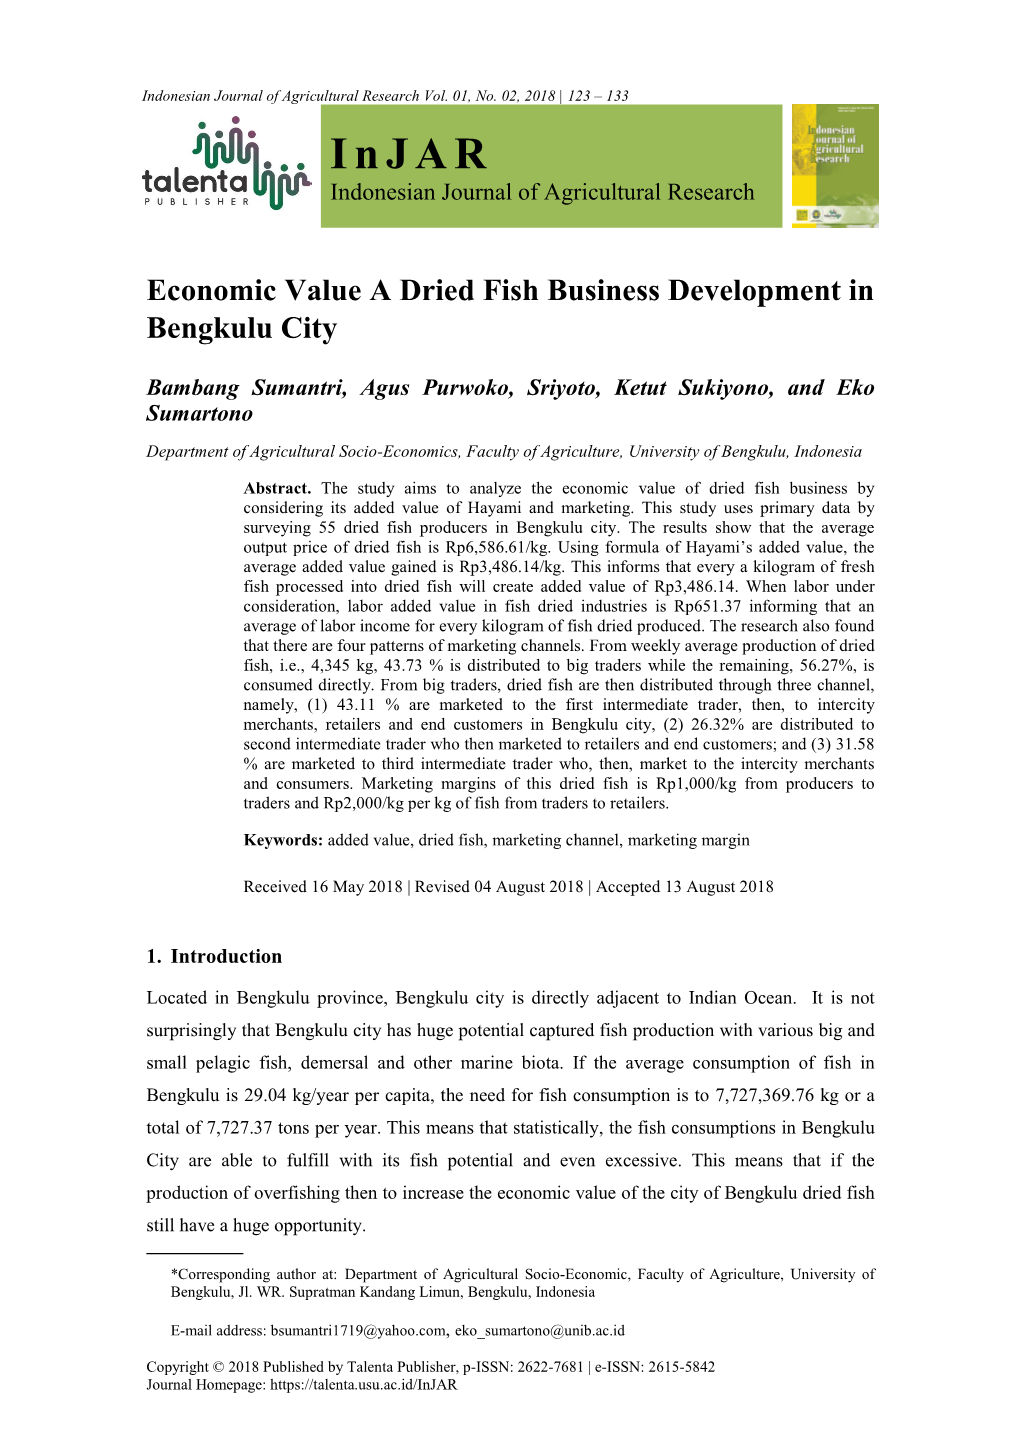 Economic Value a Dried Fish Business Development in Bengkulu City